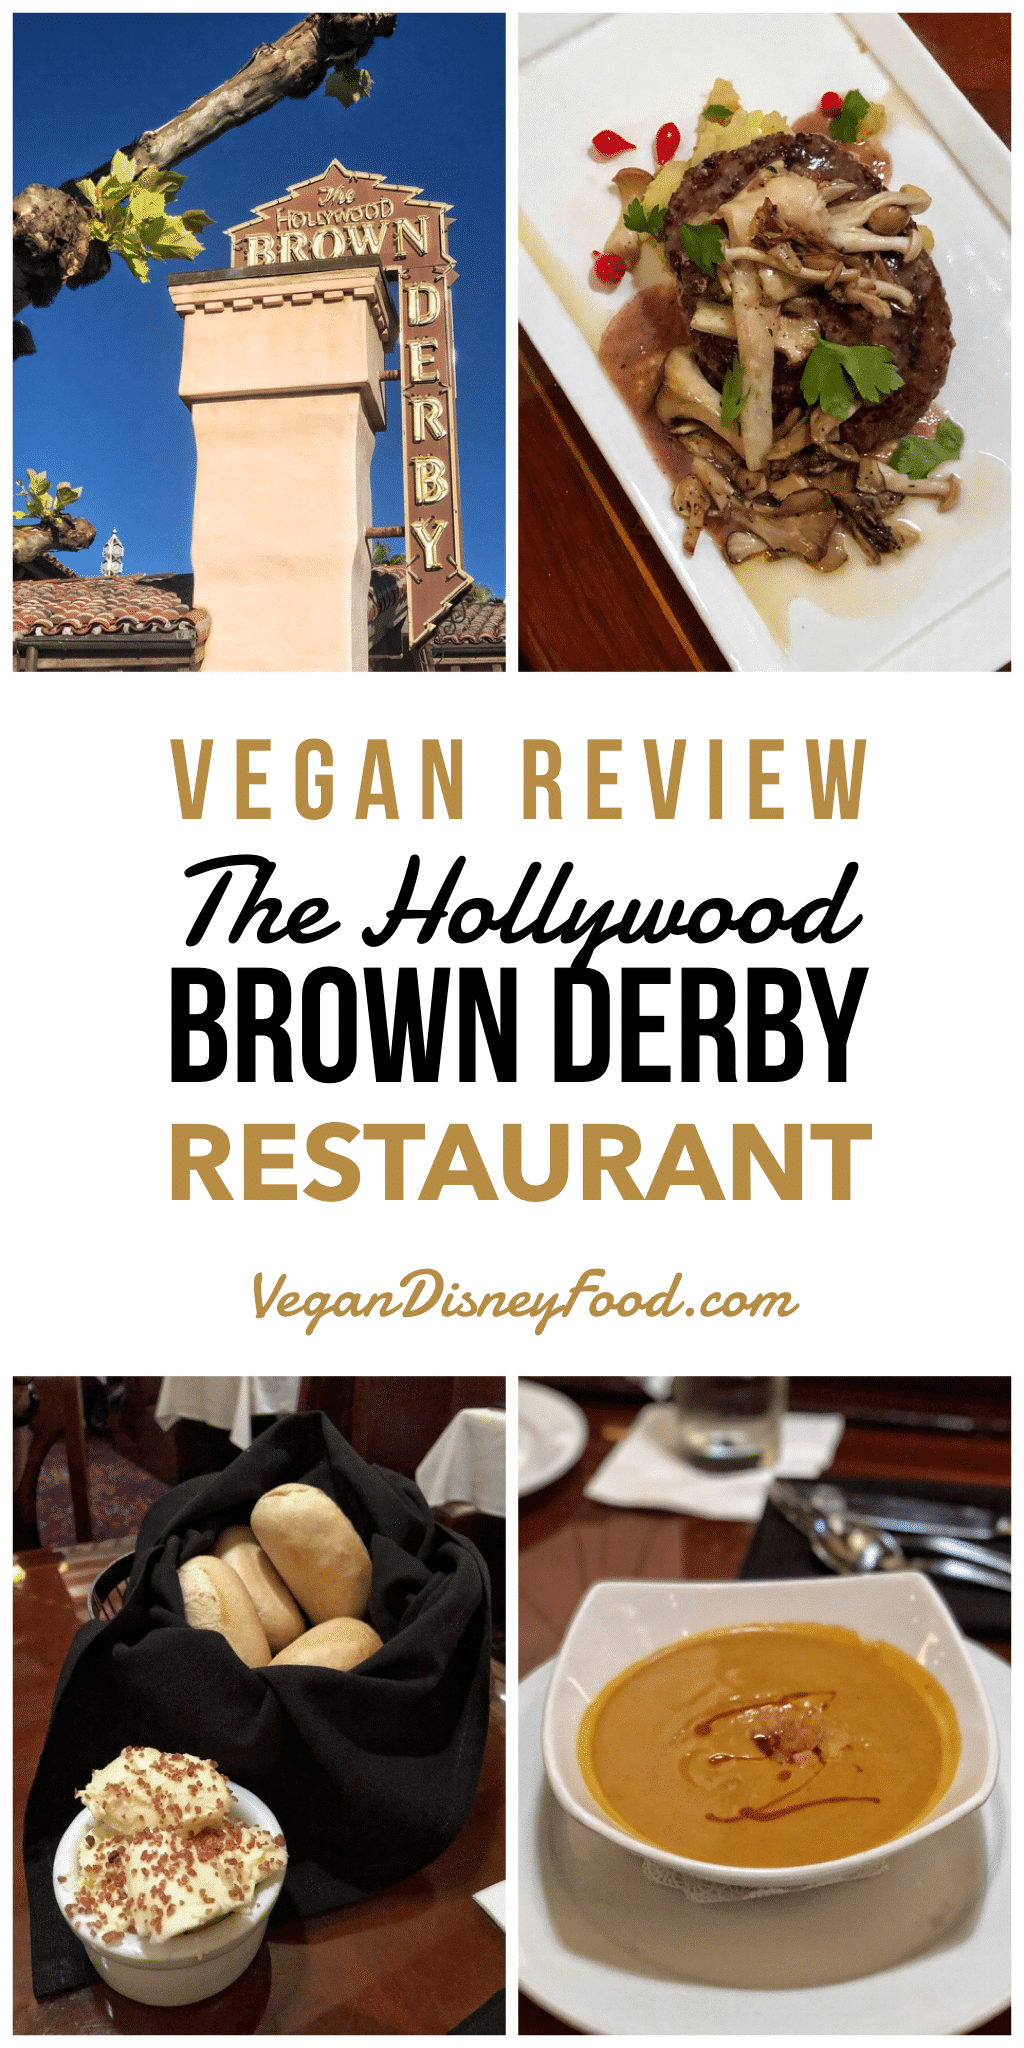 Vegan Options at The Hollywood Brown Derby in Disney’s Hollywood Studios at Walt Disney World